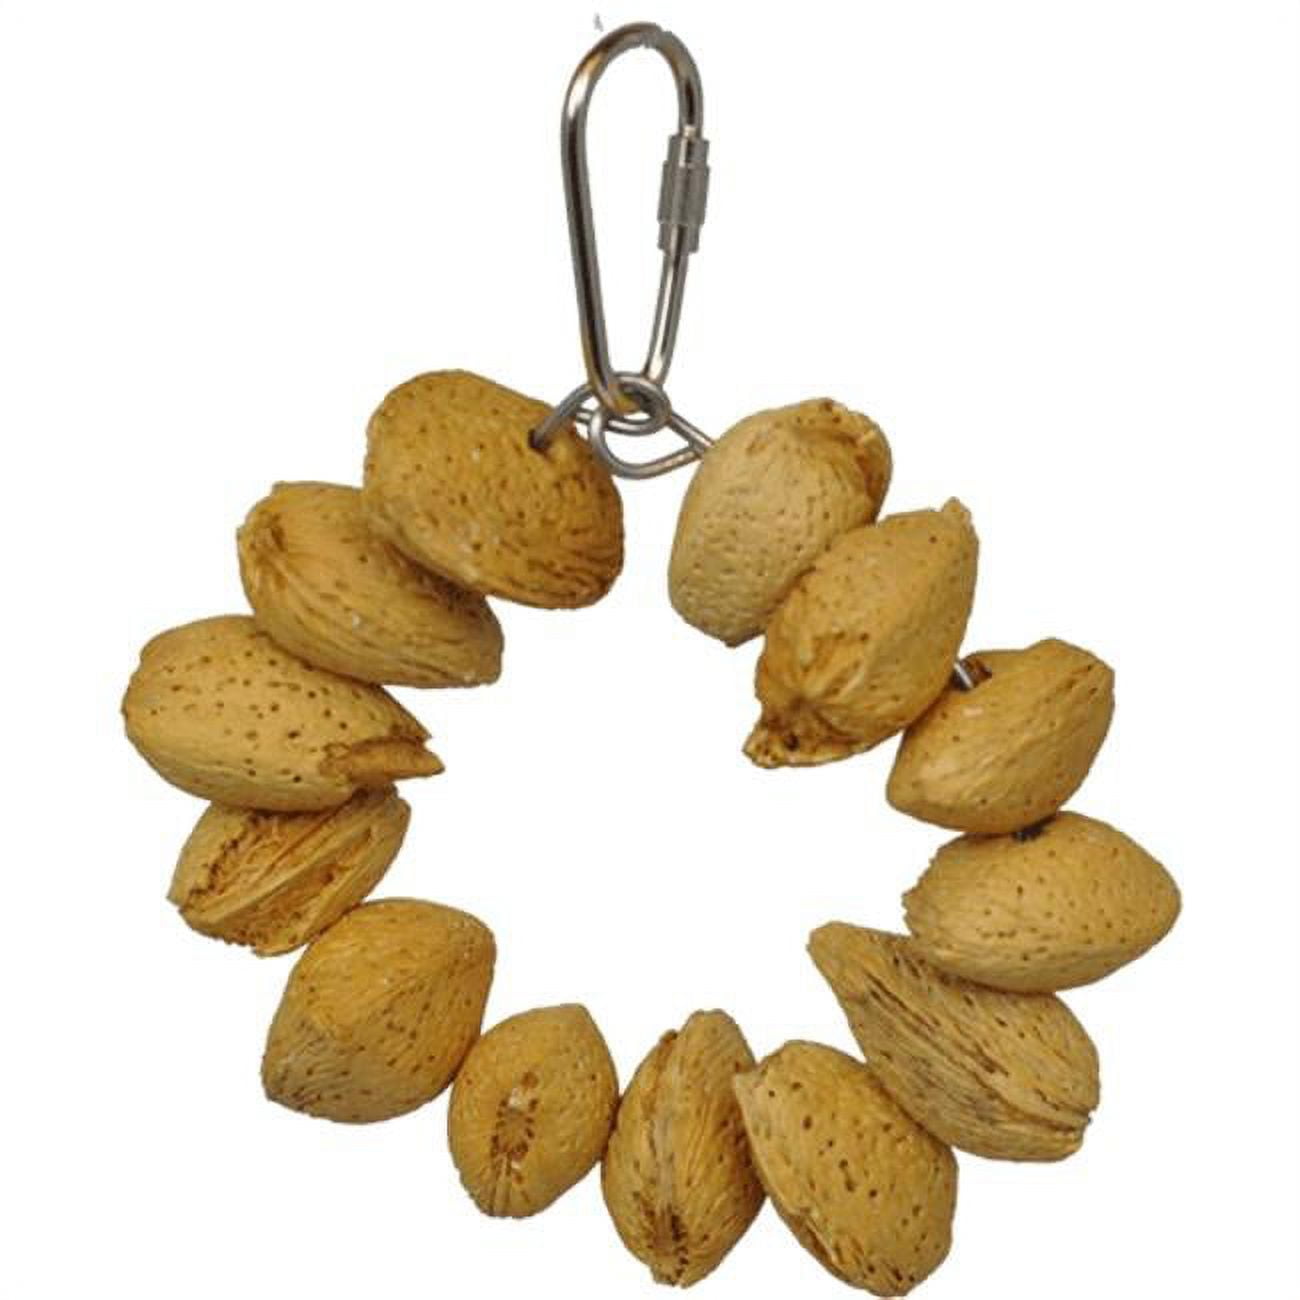 Hb893 Almond Nut Ring Jr. Bird Toy